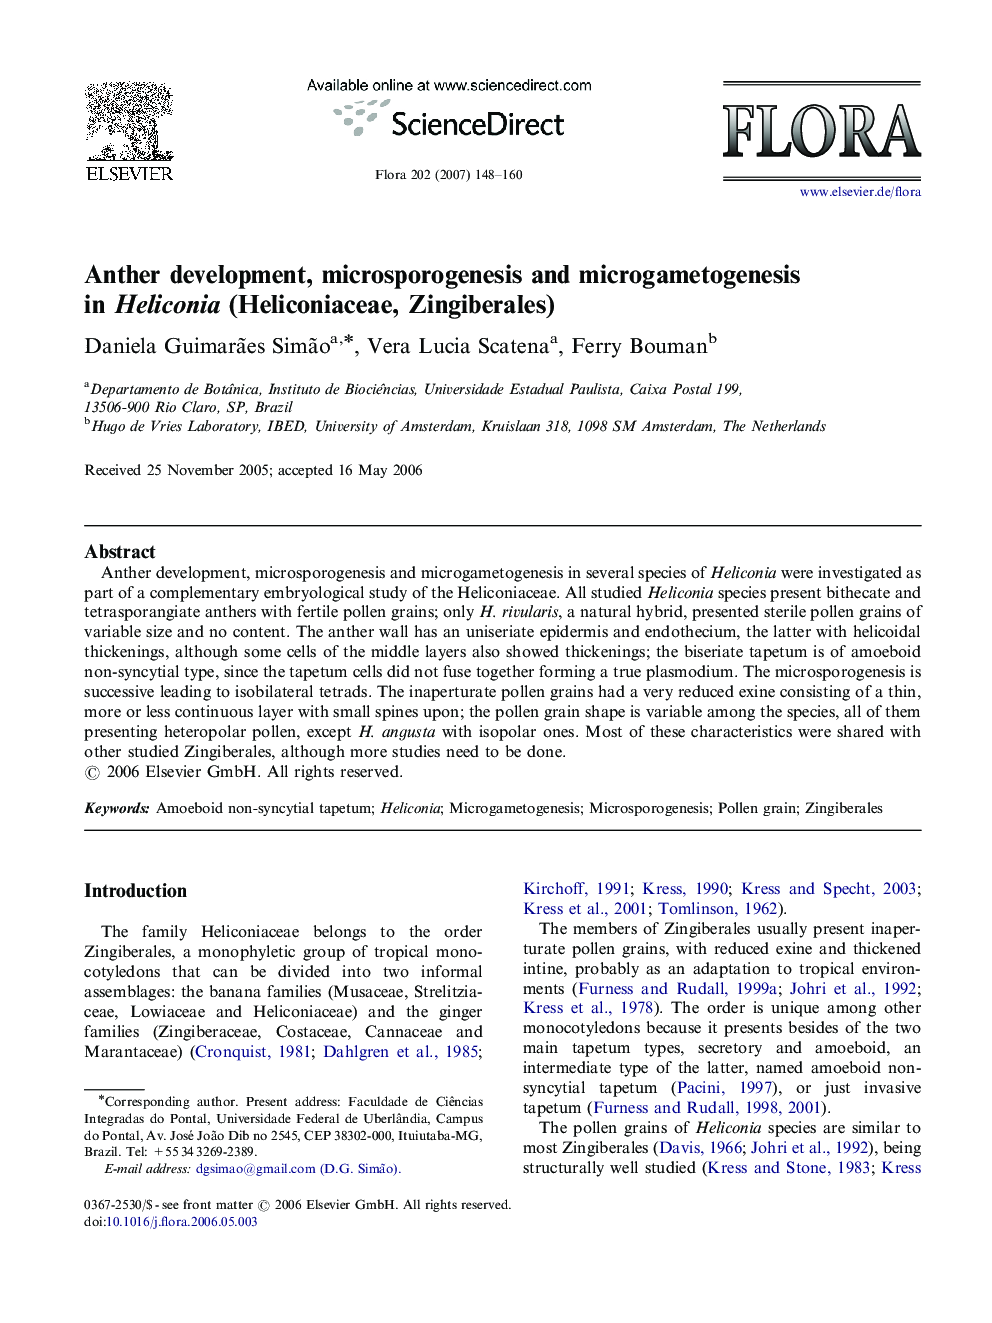 Anther development, microsporogenesis and microgametogenesis in Heliconia (Heliconiaceae, Zingiberales)